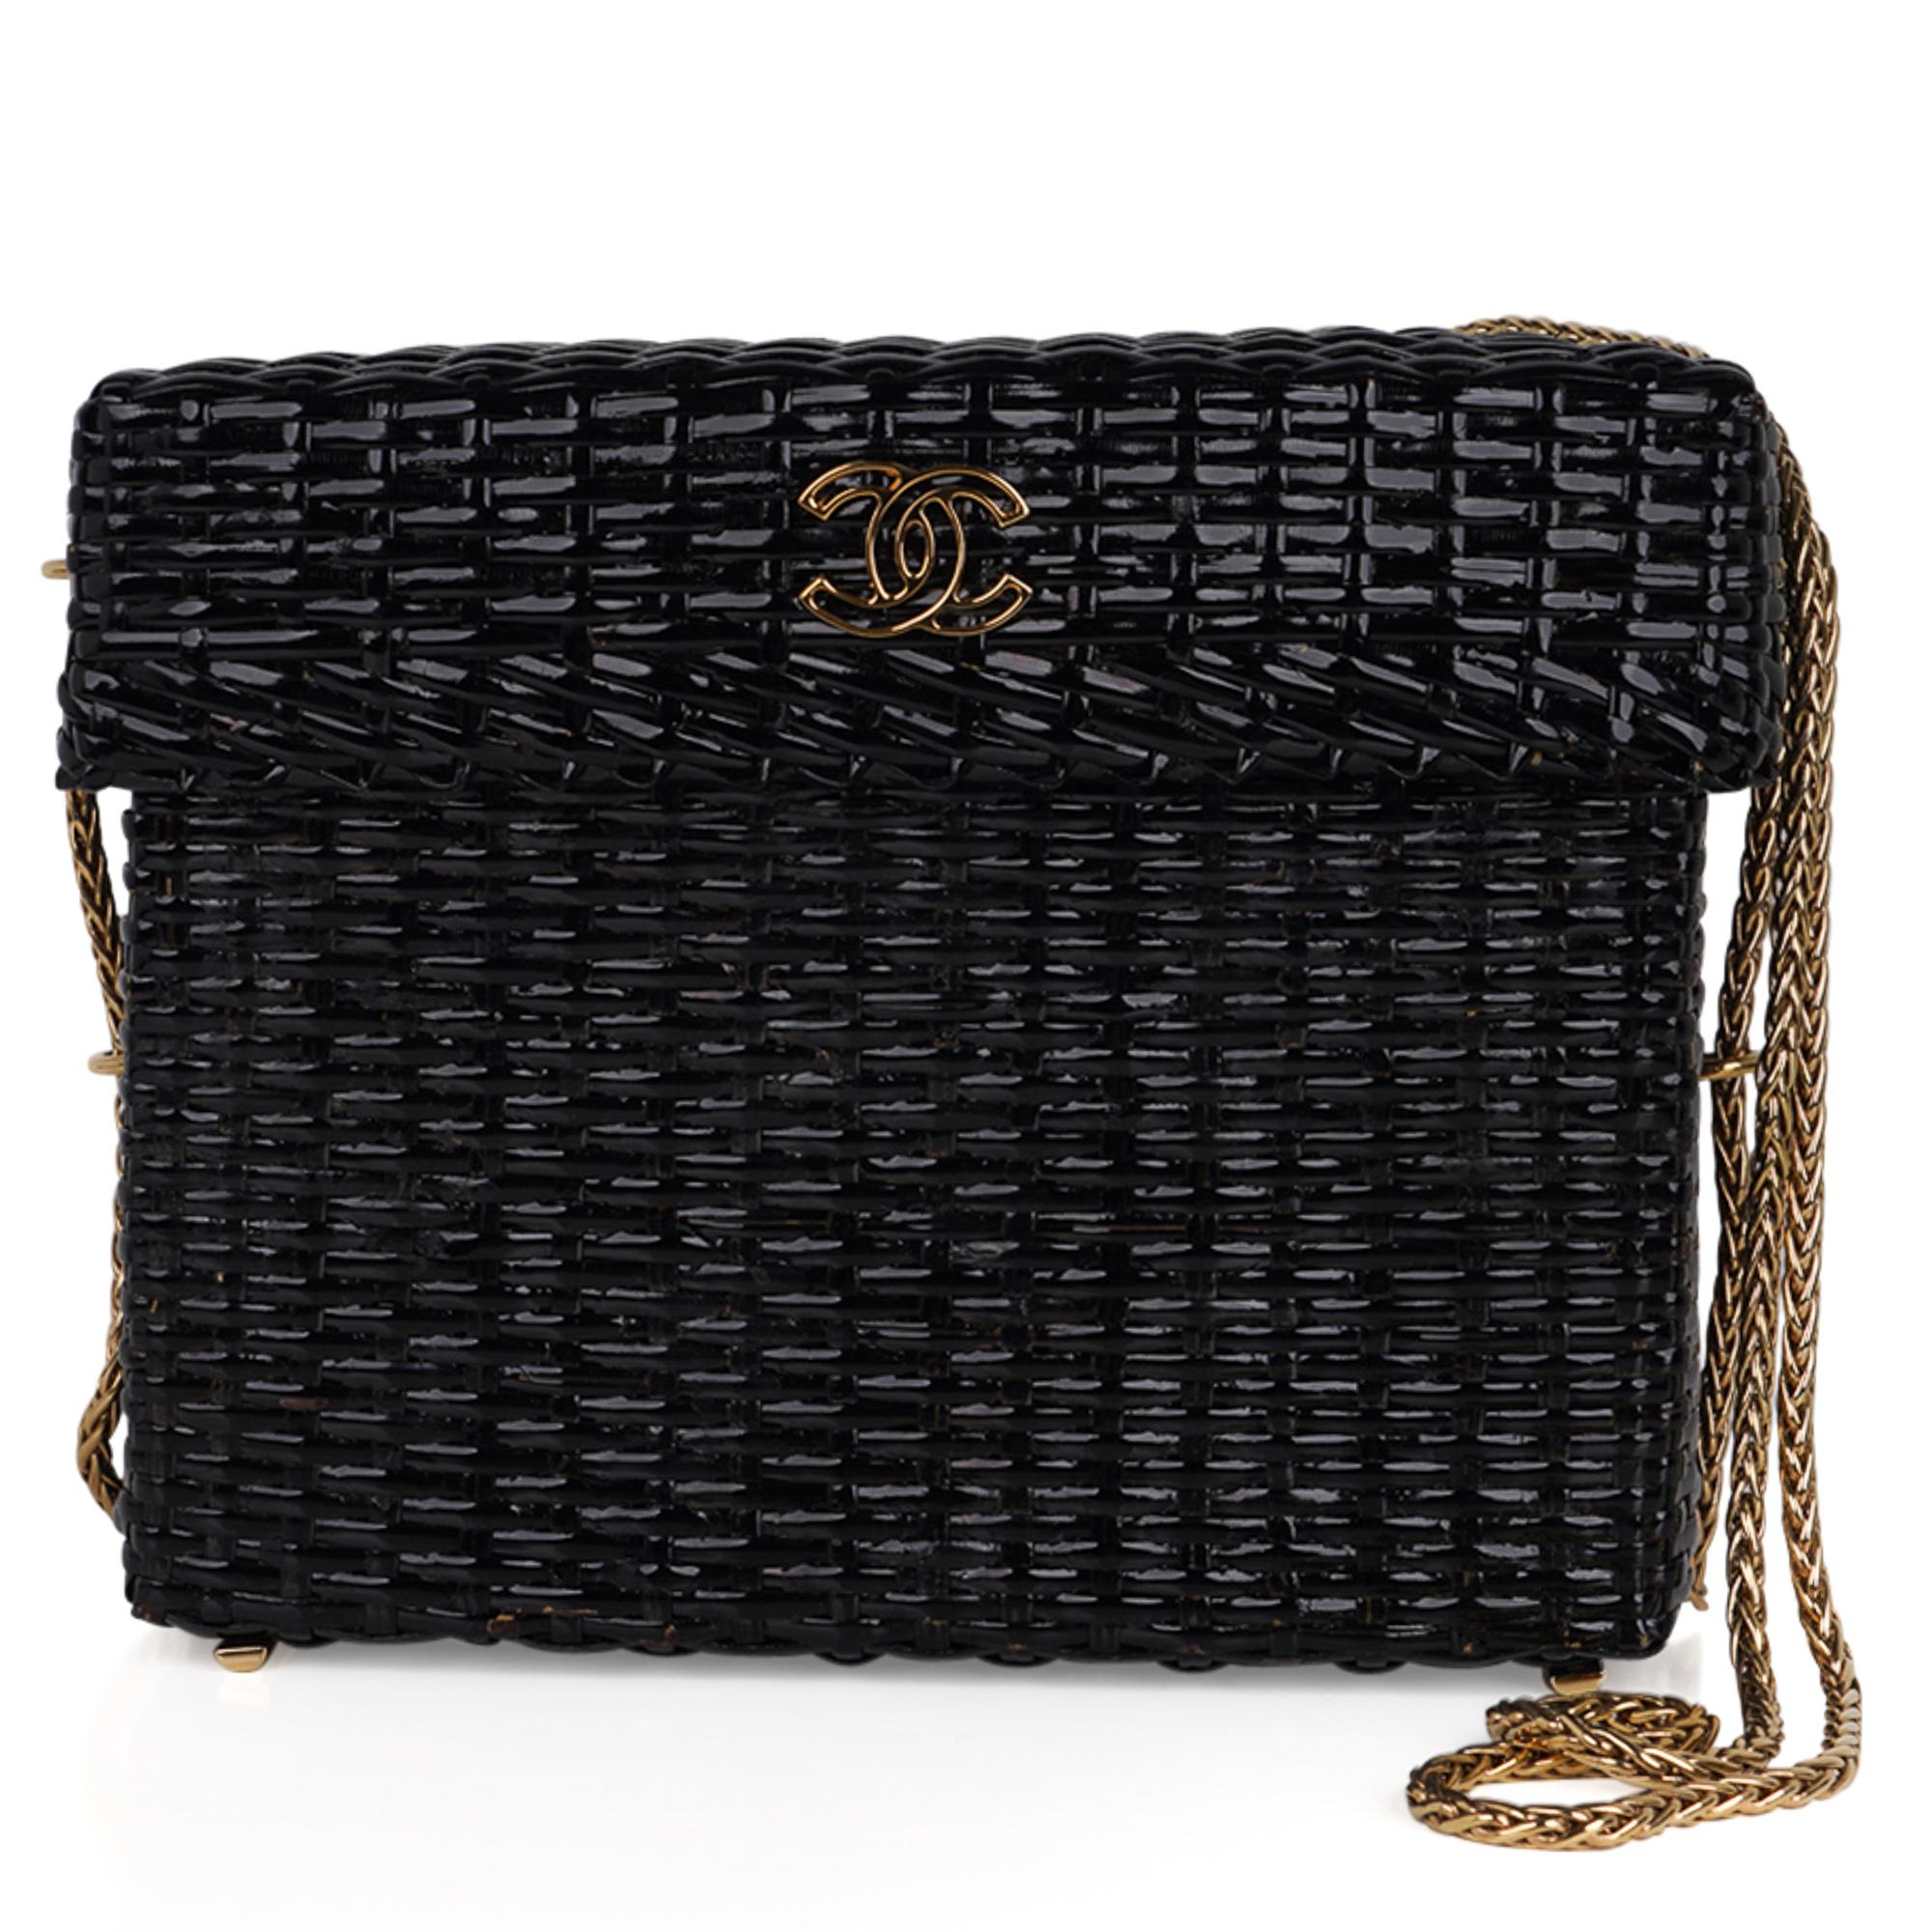 Chanel Bag Black Vintage Wicker Picnic Lunch Basket Gold Chain Strap 1